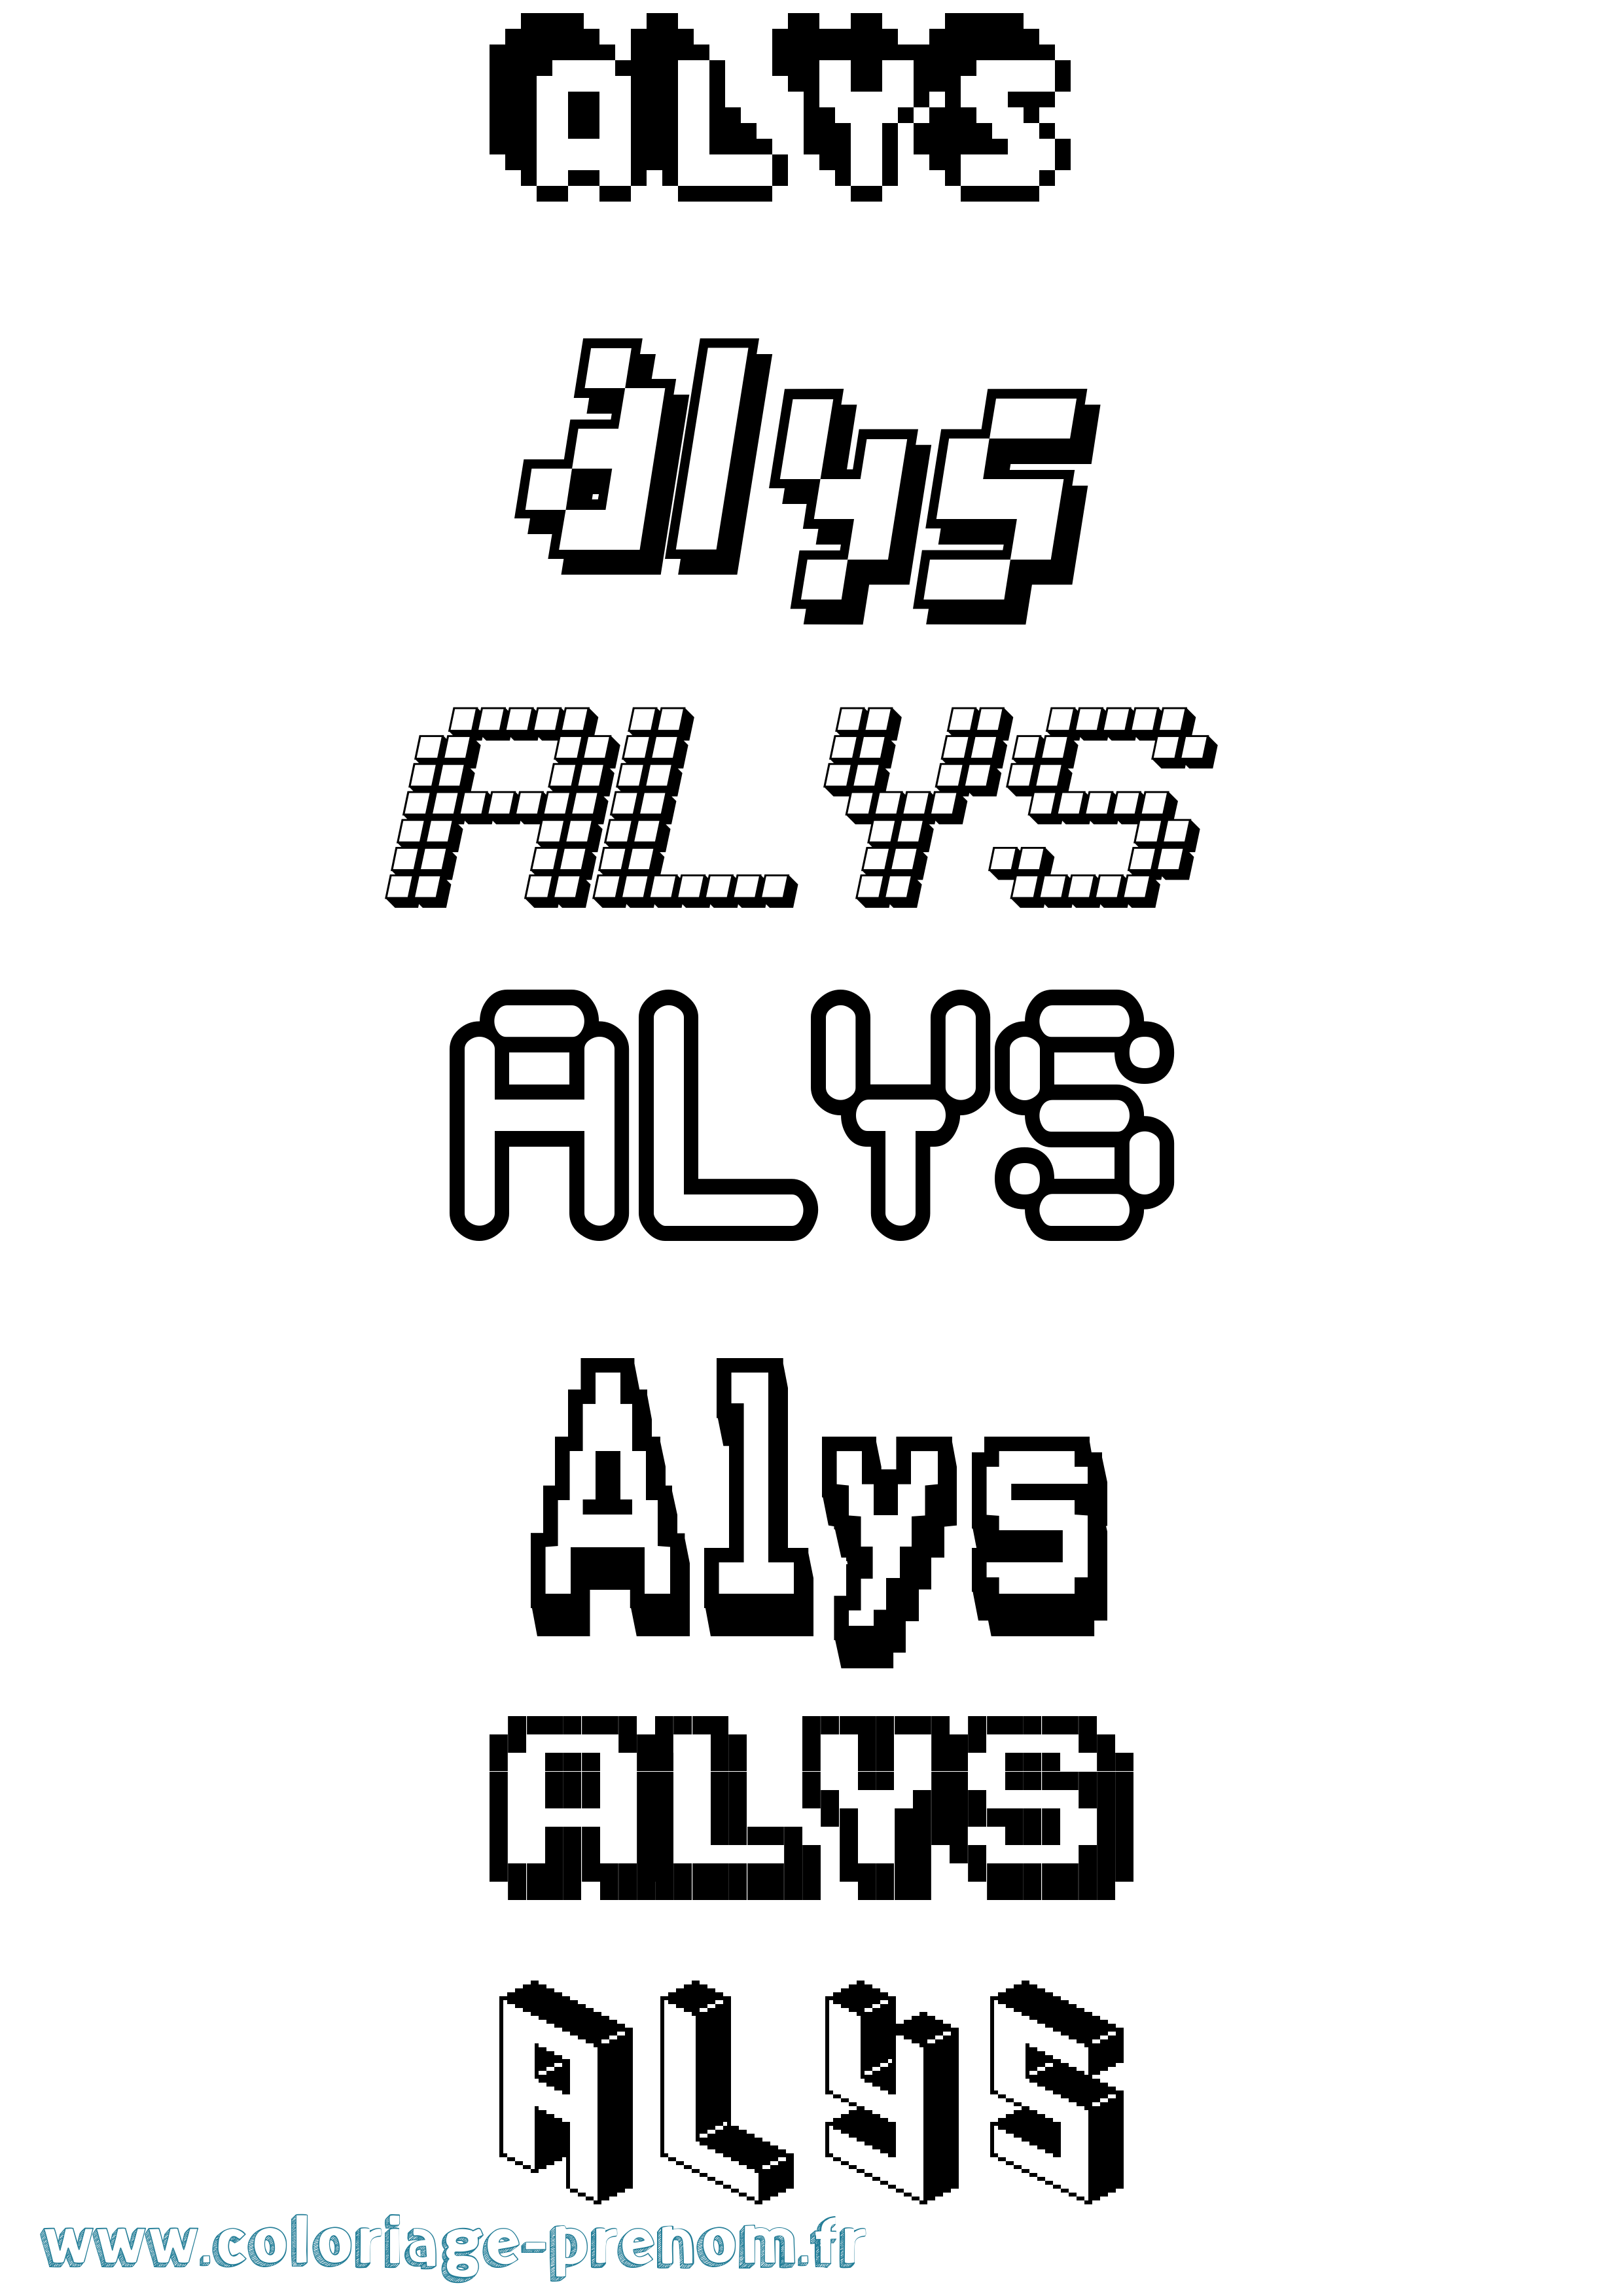 Coloriage prénom Alys Pixel